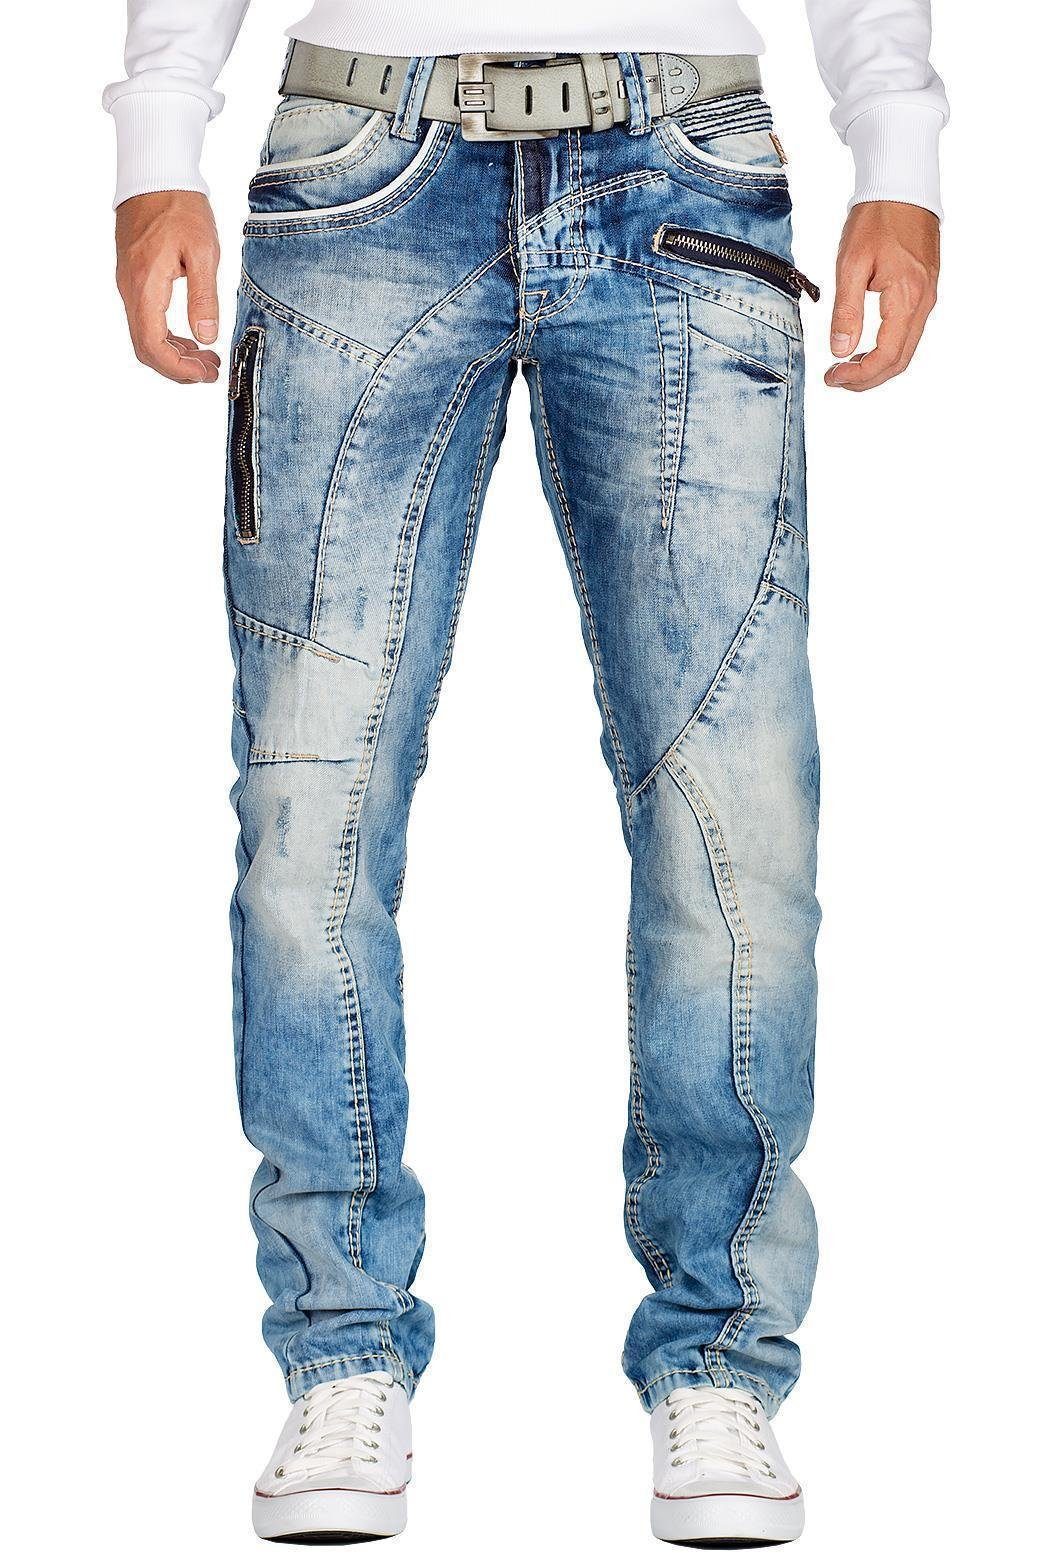 Men / Herren Jeans Hose CIPO & BAXX C-1095 Regular Fit 